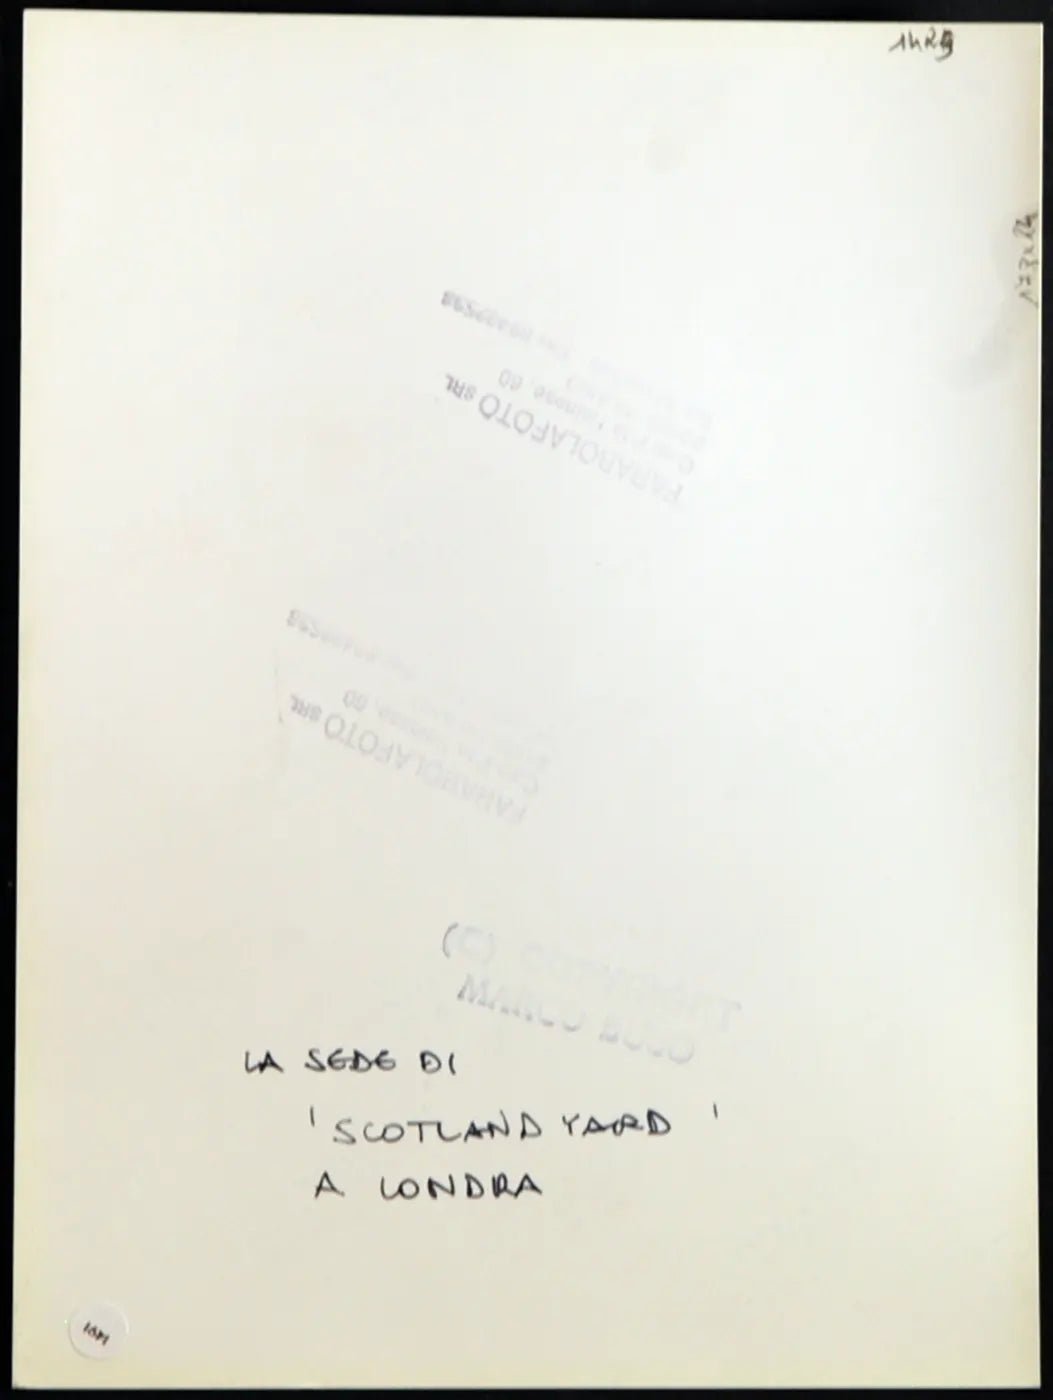 Londra Scotland Yard anni 90 Ft 1491 - Stampa 24x18 cm - Farabola Stampa ai sali d'argento